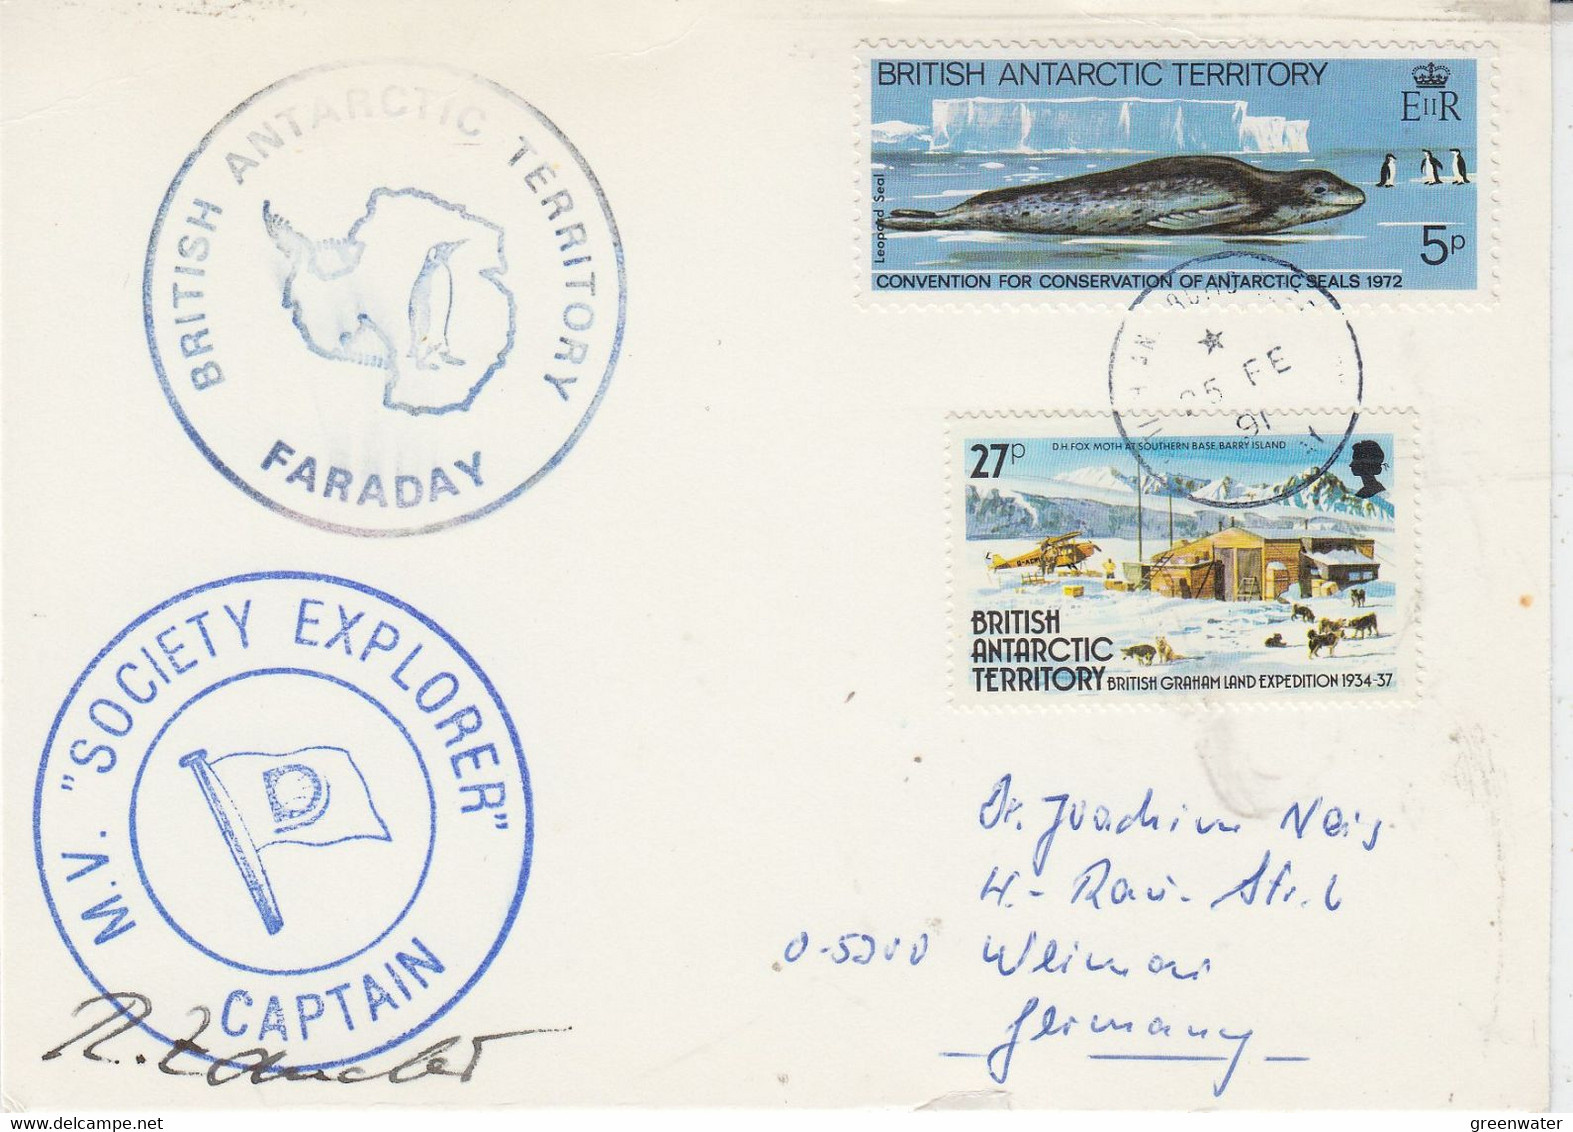 British Antarctic Territory (BAT) Ca MV Society Explorer Ca Captain Card  Ca Faraday 25 FE 1991 (AT174) - Covers & Documents